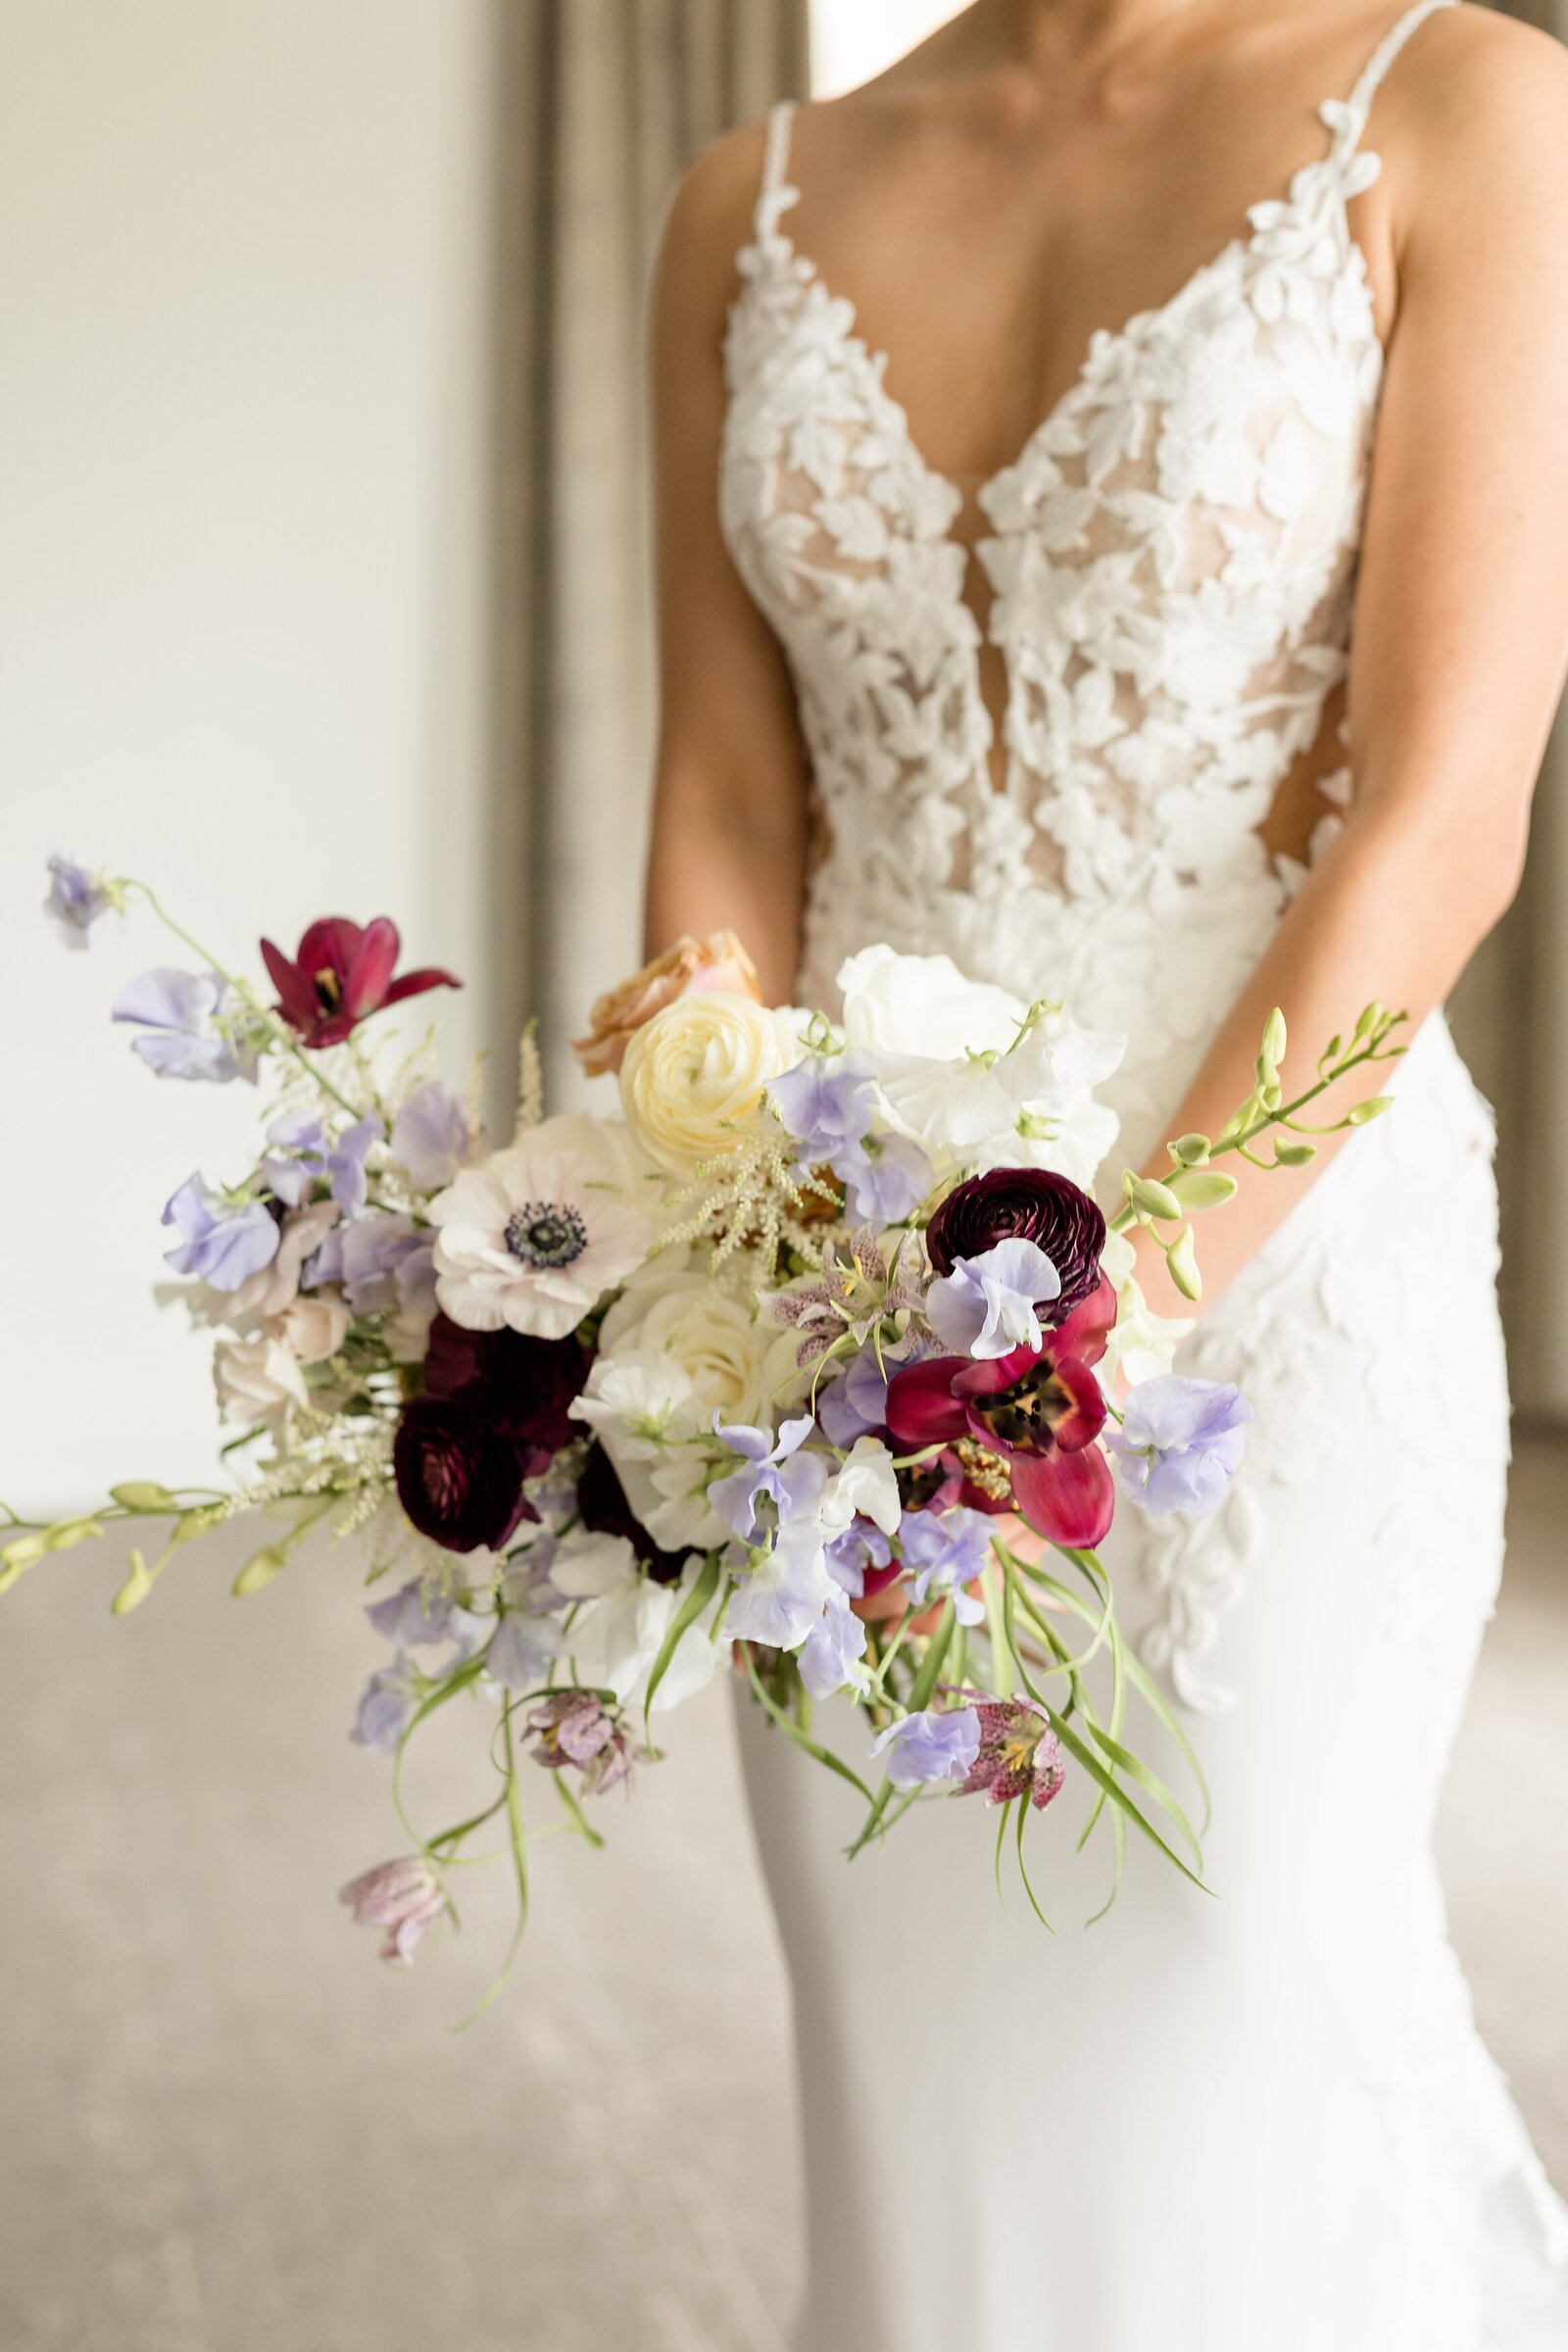 London-hunt-club-wedding-bride-holding-beautiful-floral-bouquet